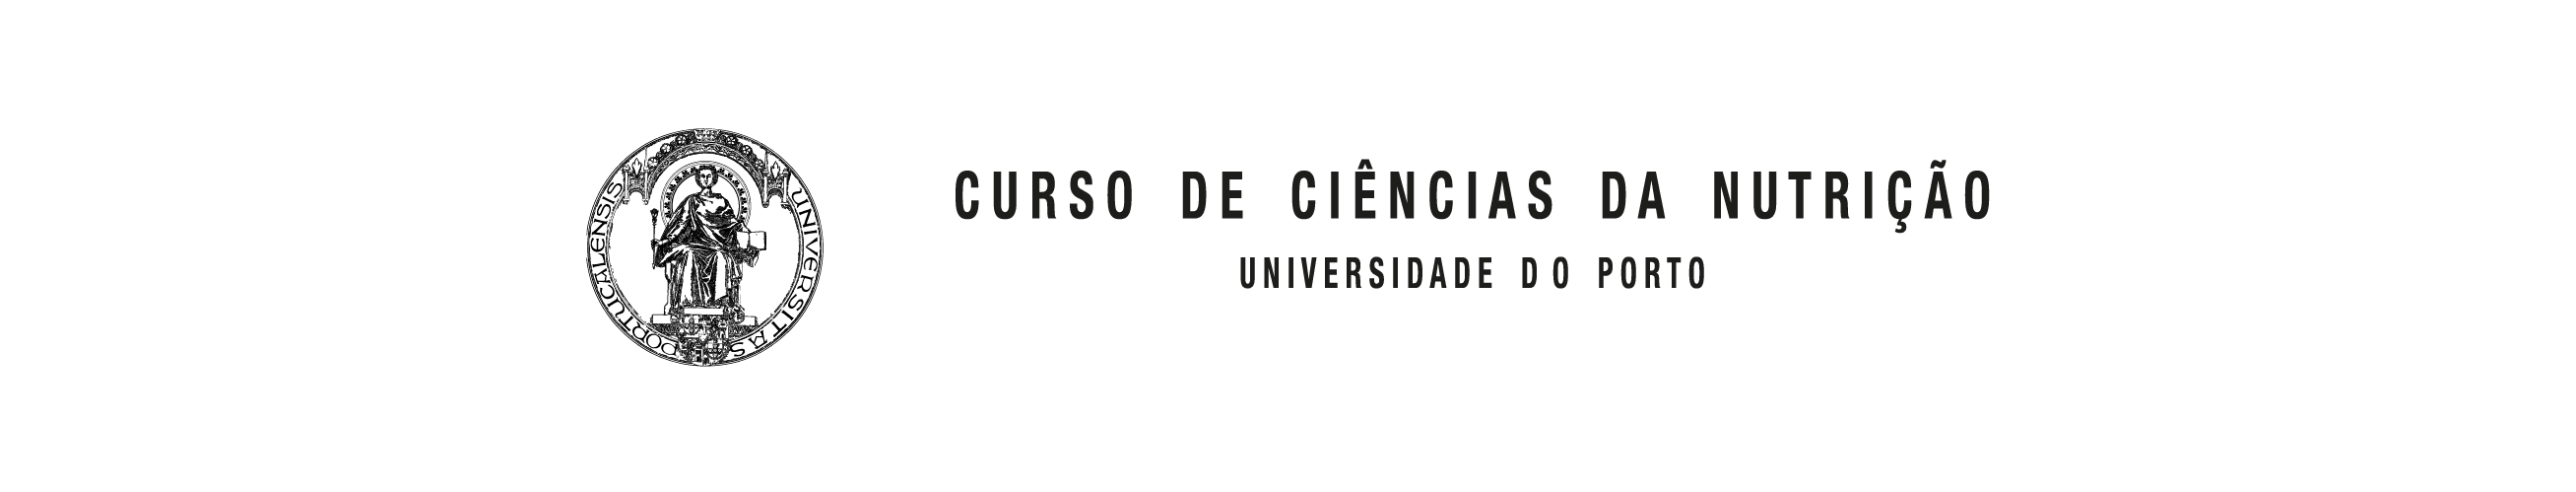 Logo -  Course in Nutritional Sciences - University of Porto (1976)